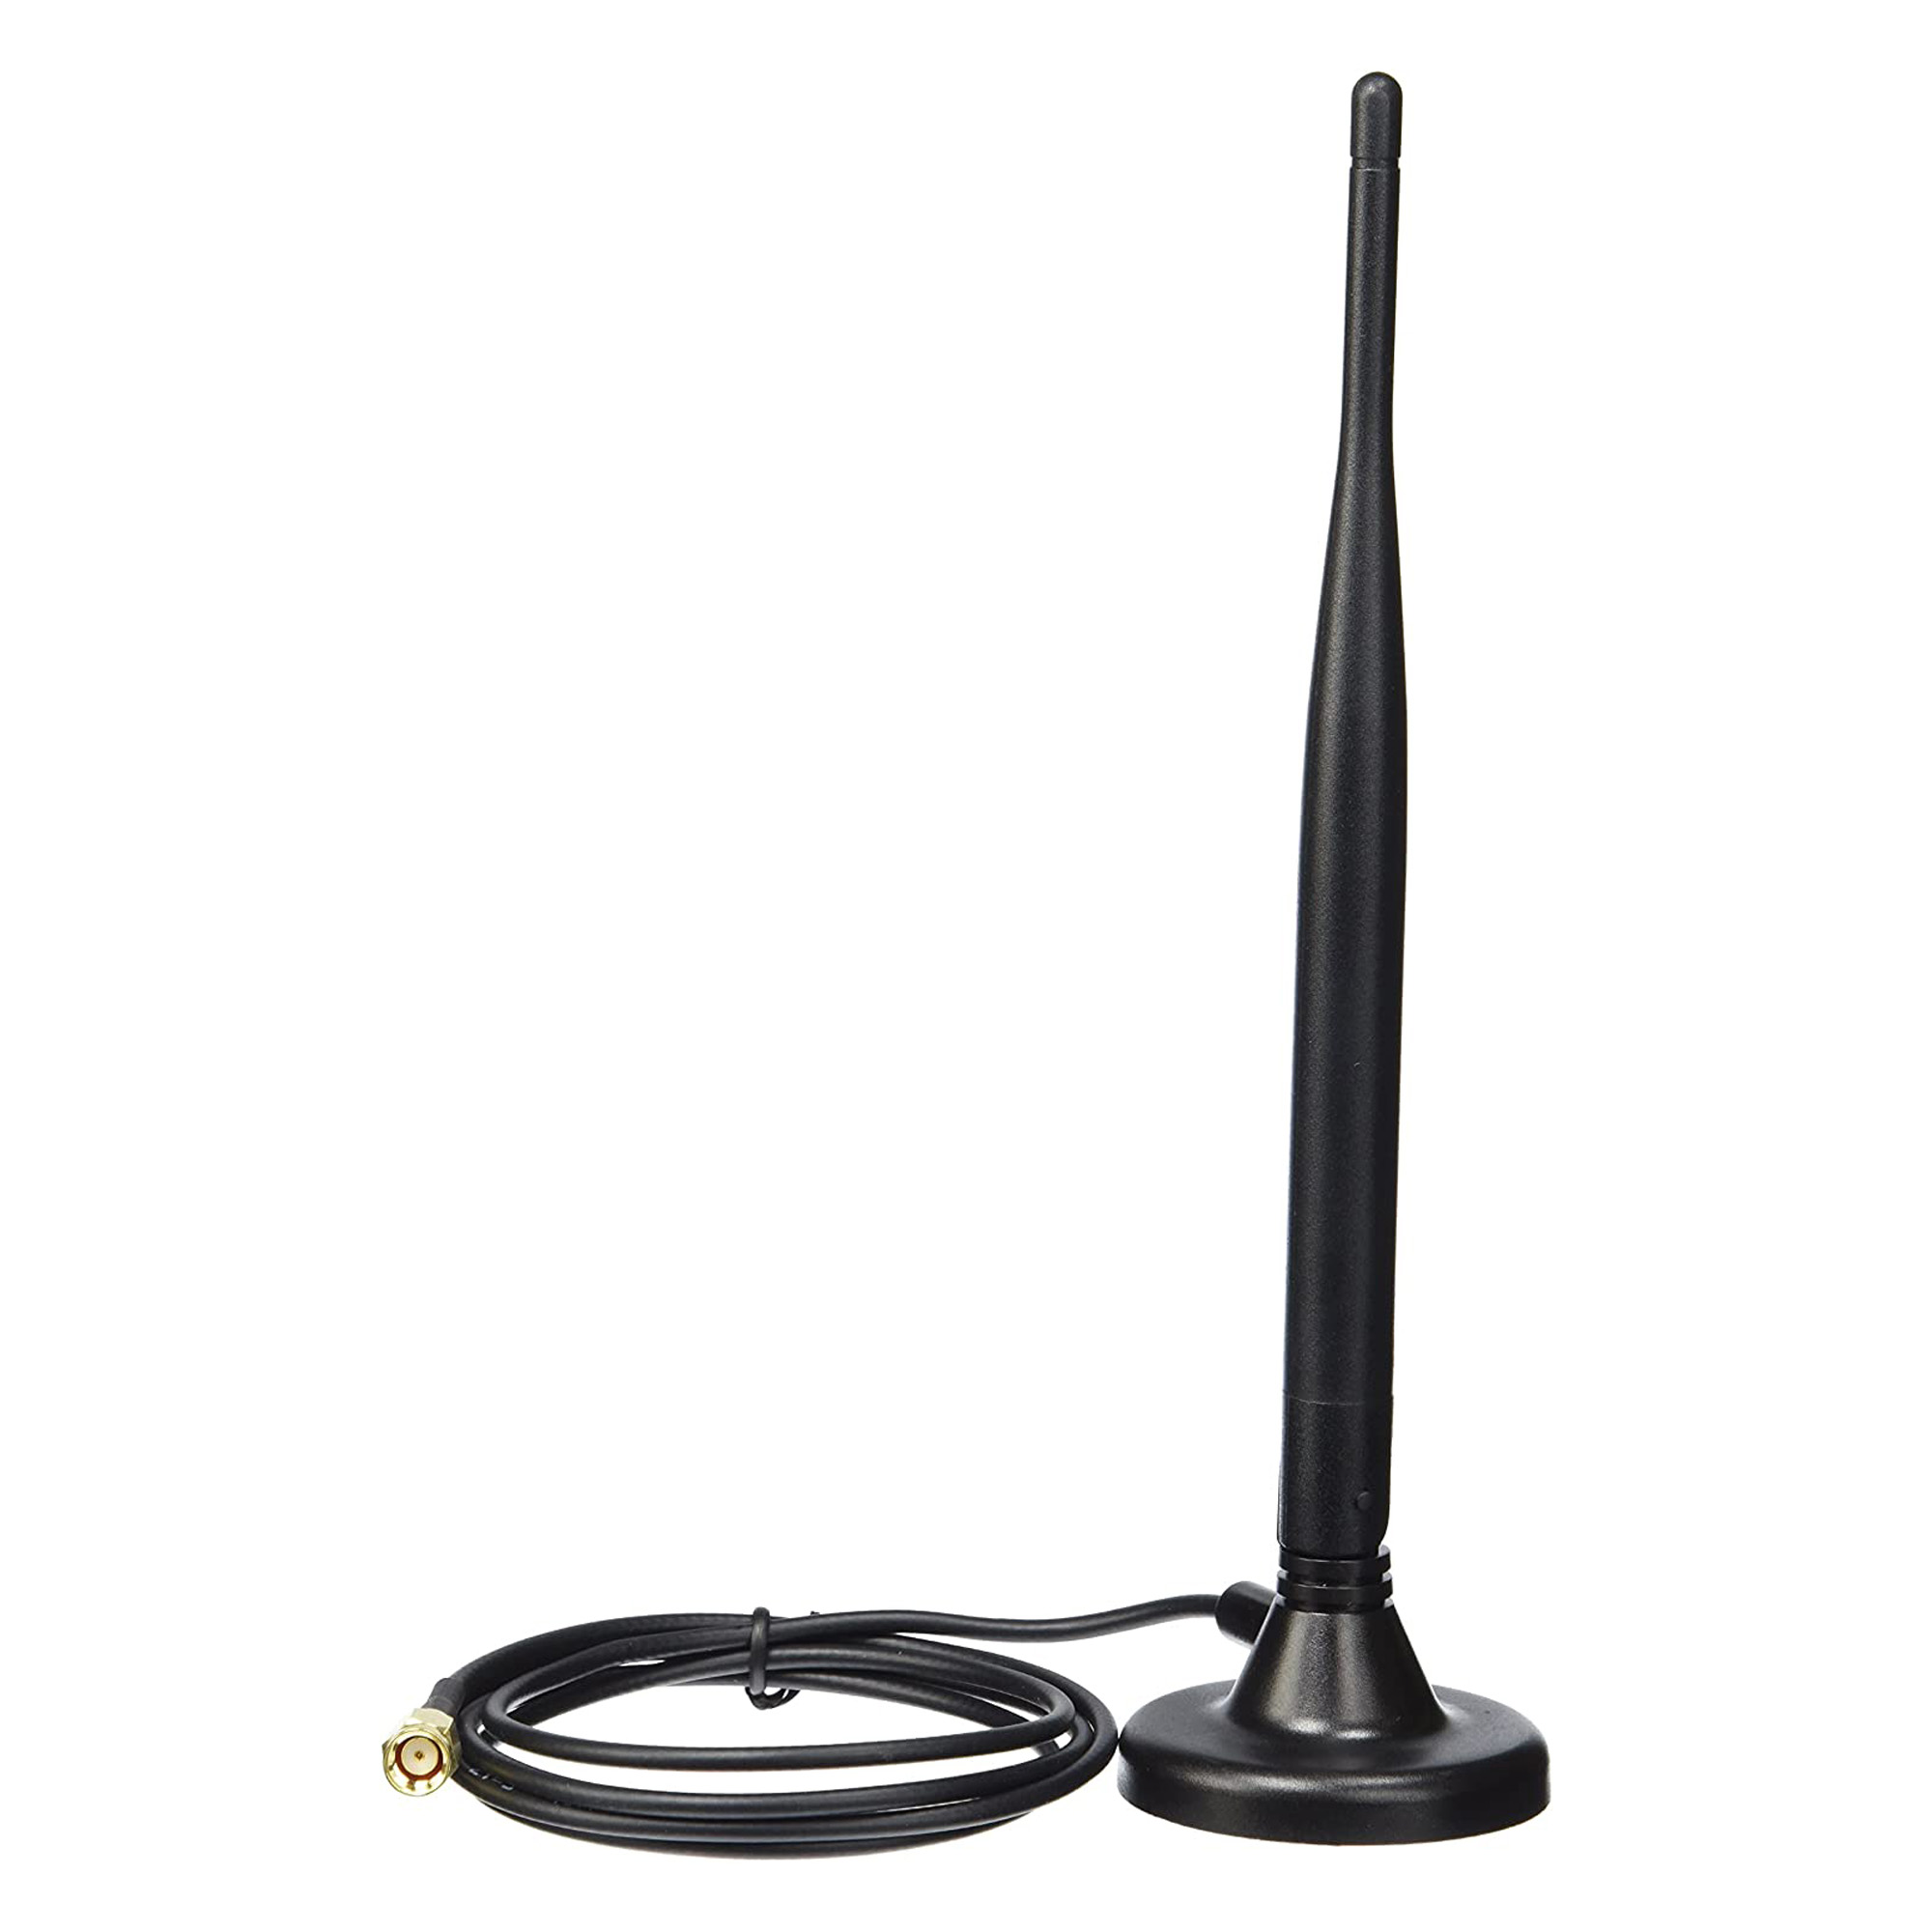 Wireless antena Tenda 5dbi Q2405